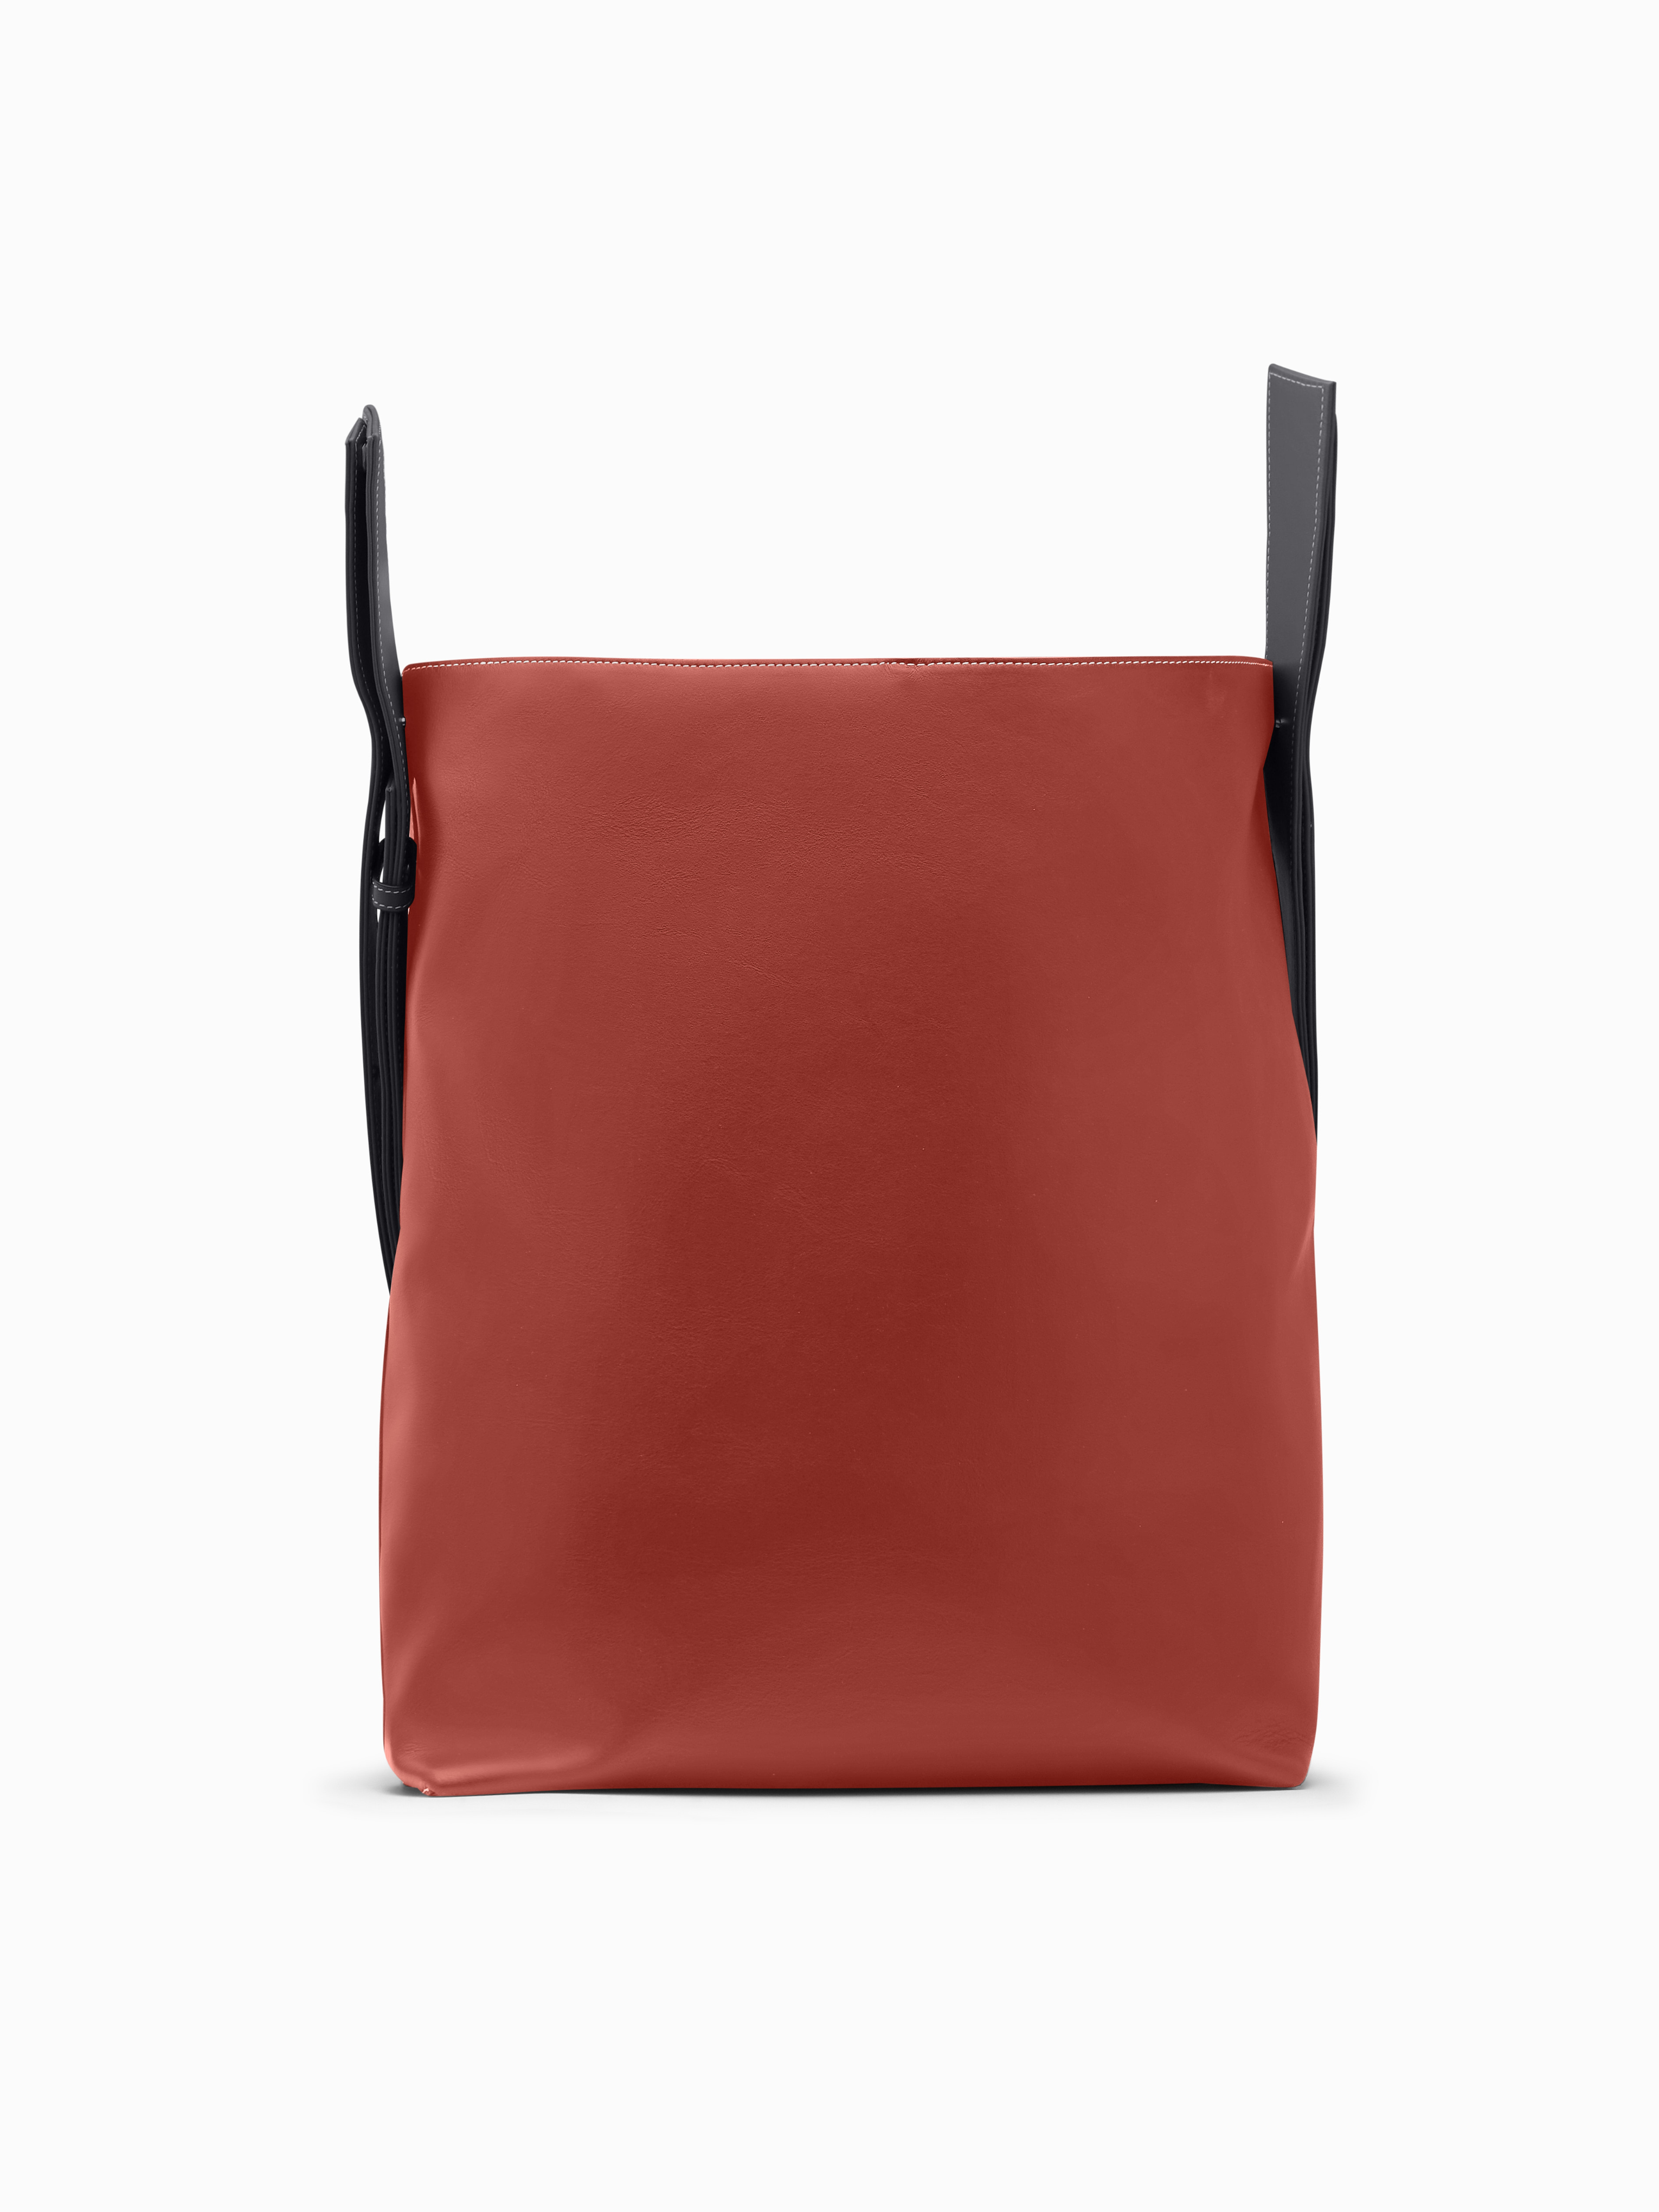 Vintage Samsonite SATURN Carry On Travel Bag Work Bag With Original Key |  eBay